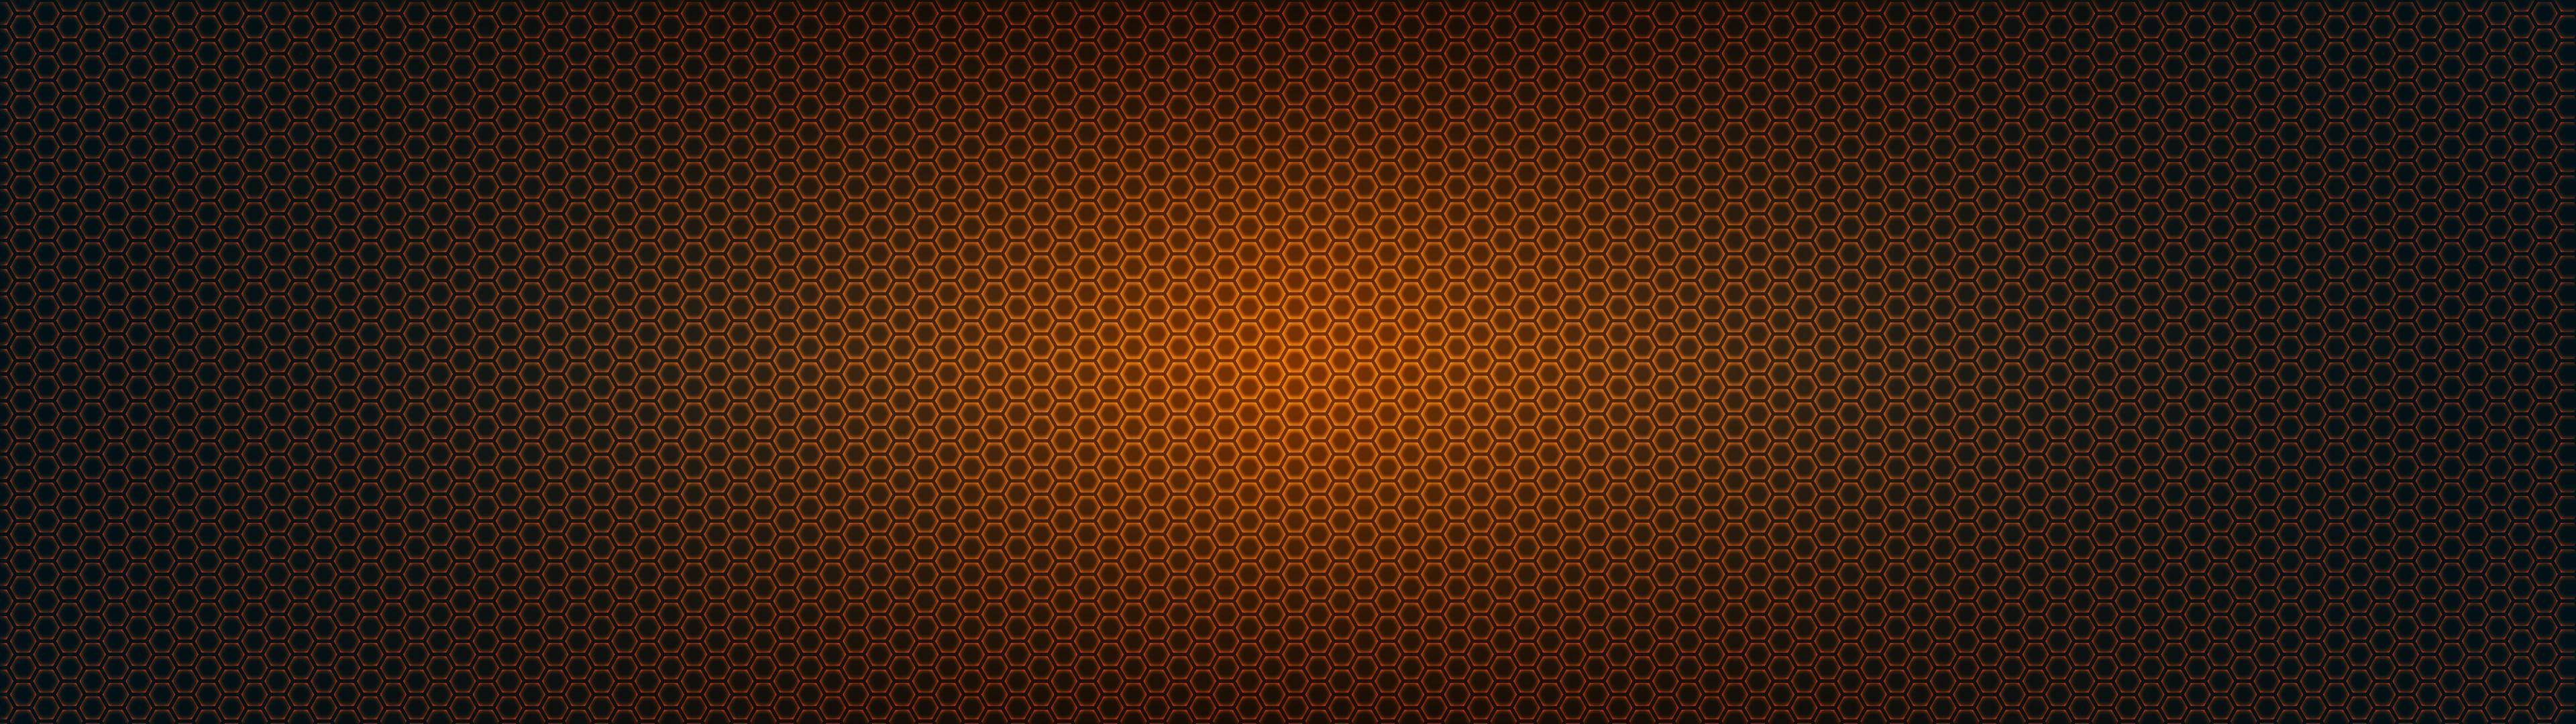 General 3840x1080 multiple display abstract pattern geometry hexagon texture digital art dual monitors